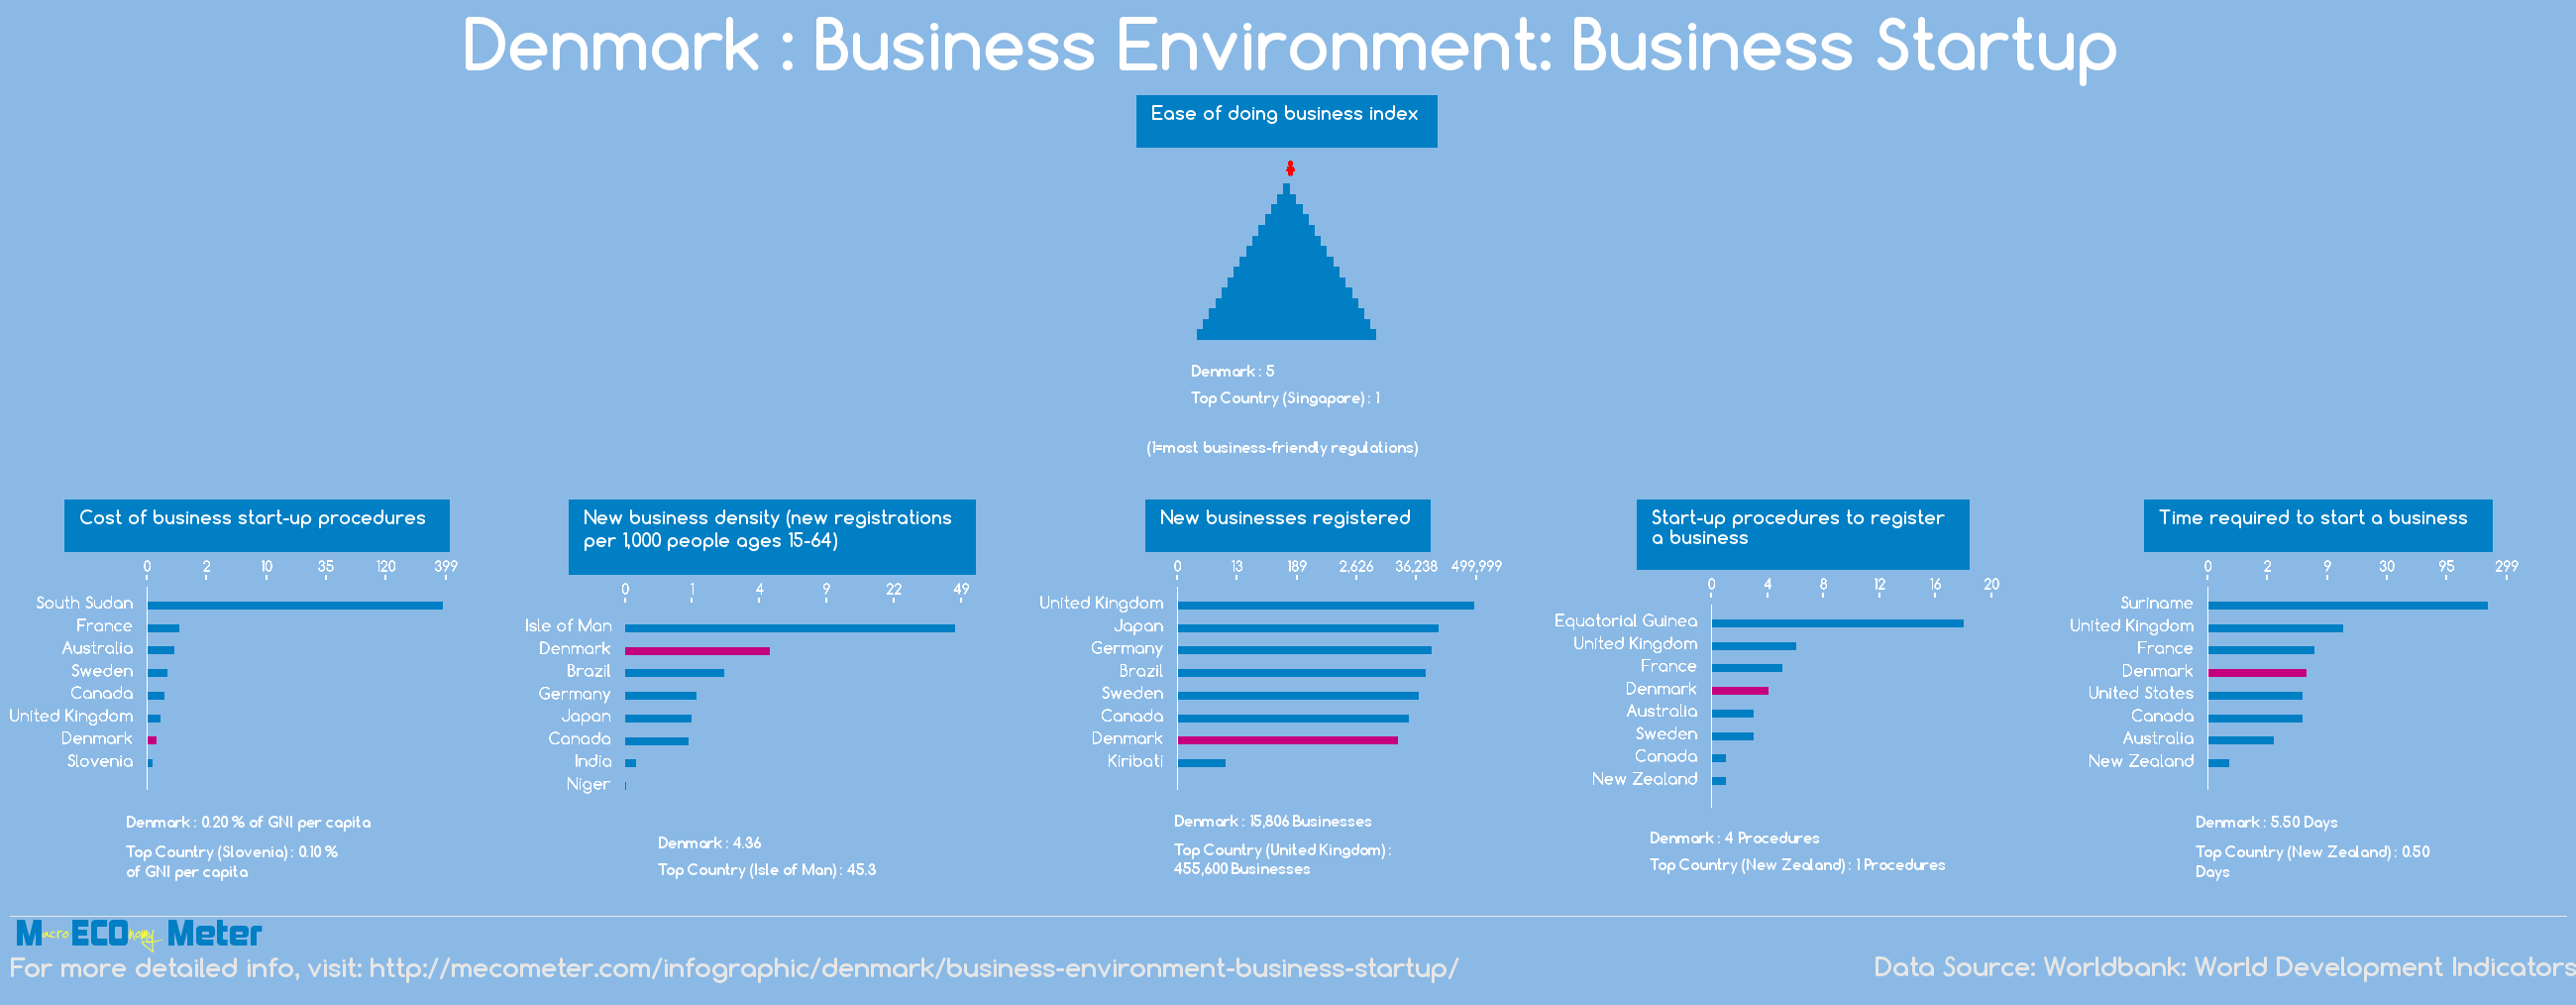 Denmark : Business Environment: Business Startup